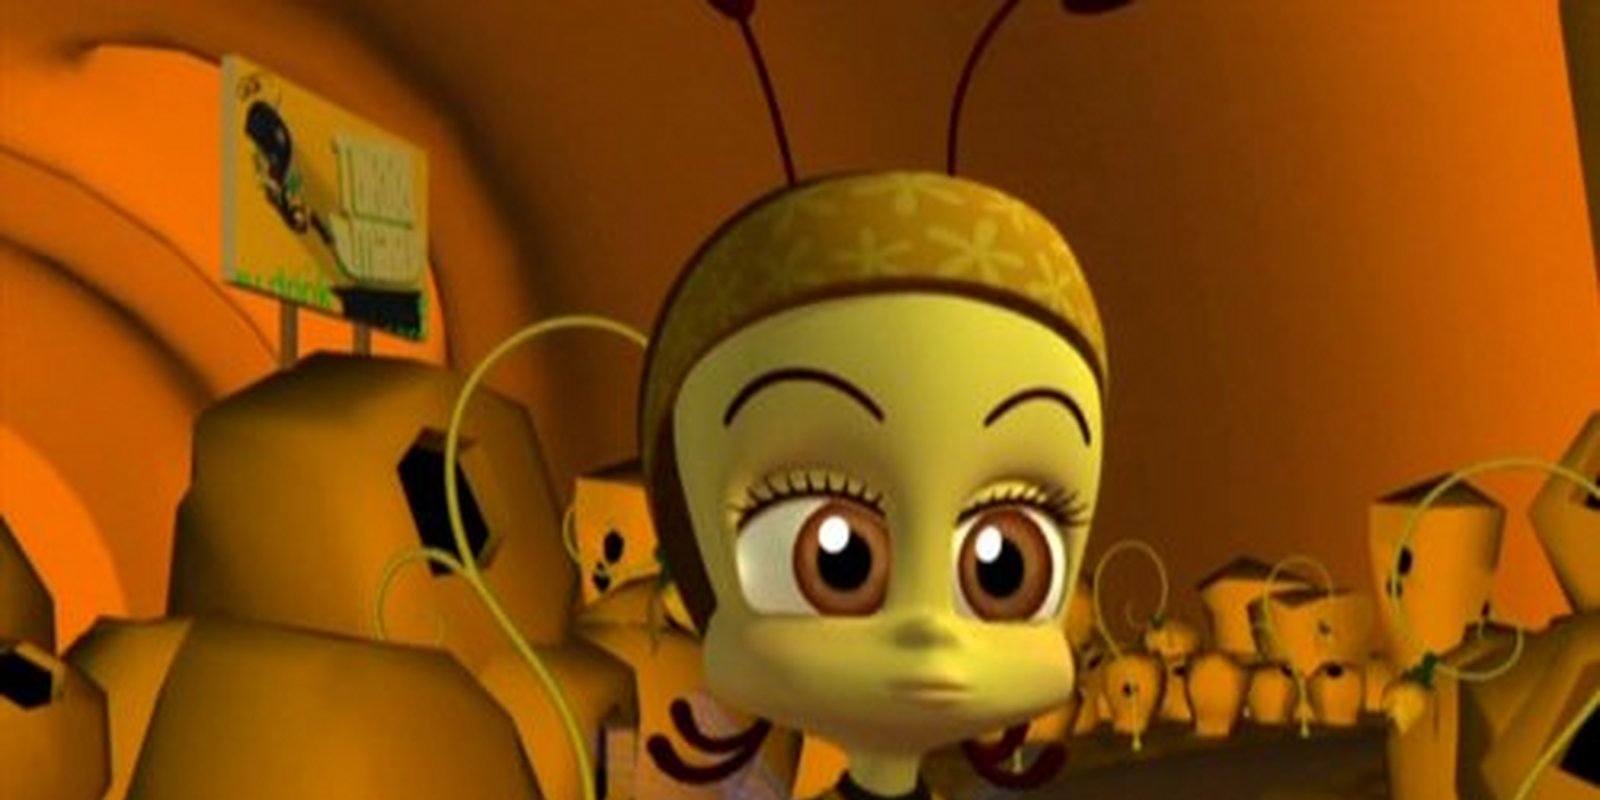 Little Bee - Die kleine Biene